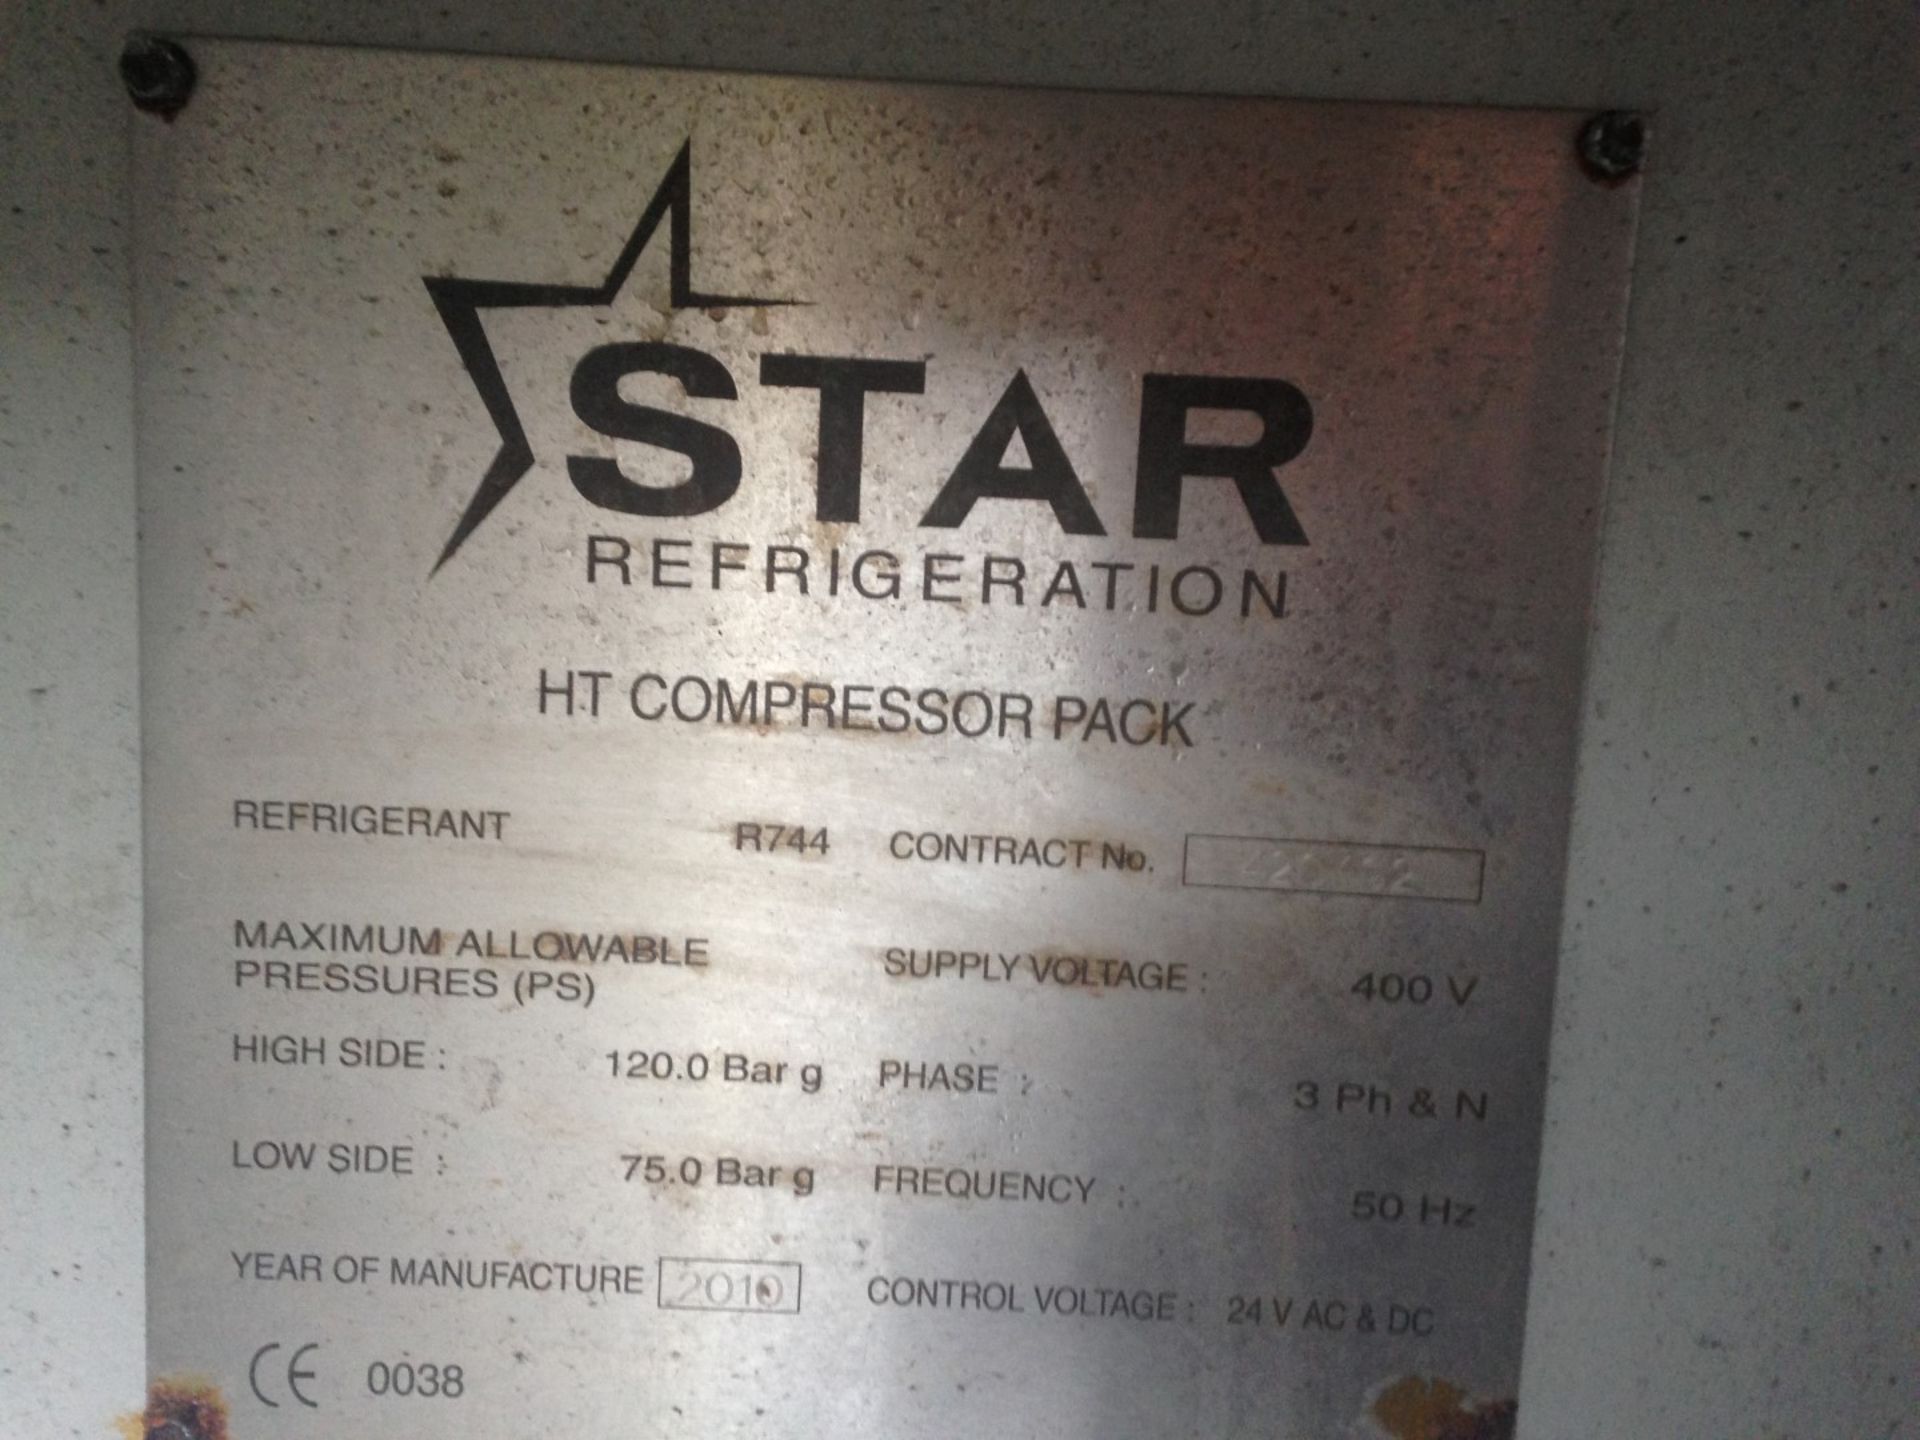 1 x Star 3 Door Refridgeration Unit With Control Panel, Dorin Semi-Hermetic Compressors, Polar - Image 2 of 8